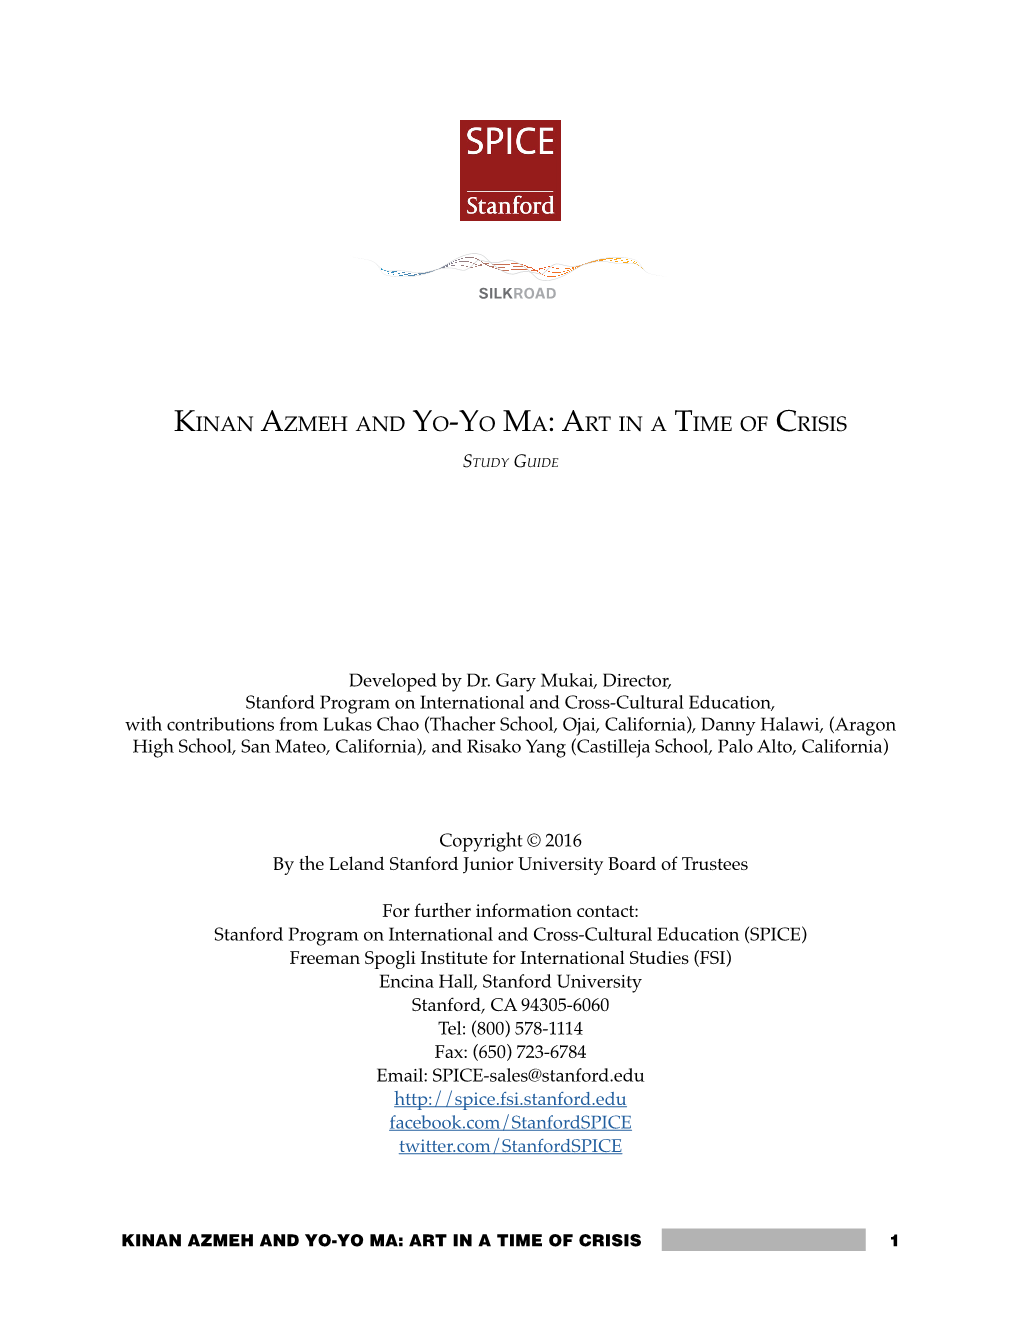 Kinan Azmeh and Yo-Yo Ma: Art in a Time of Crisis Study Guide